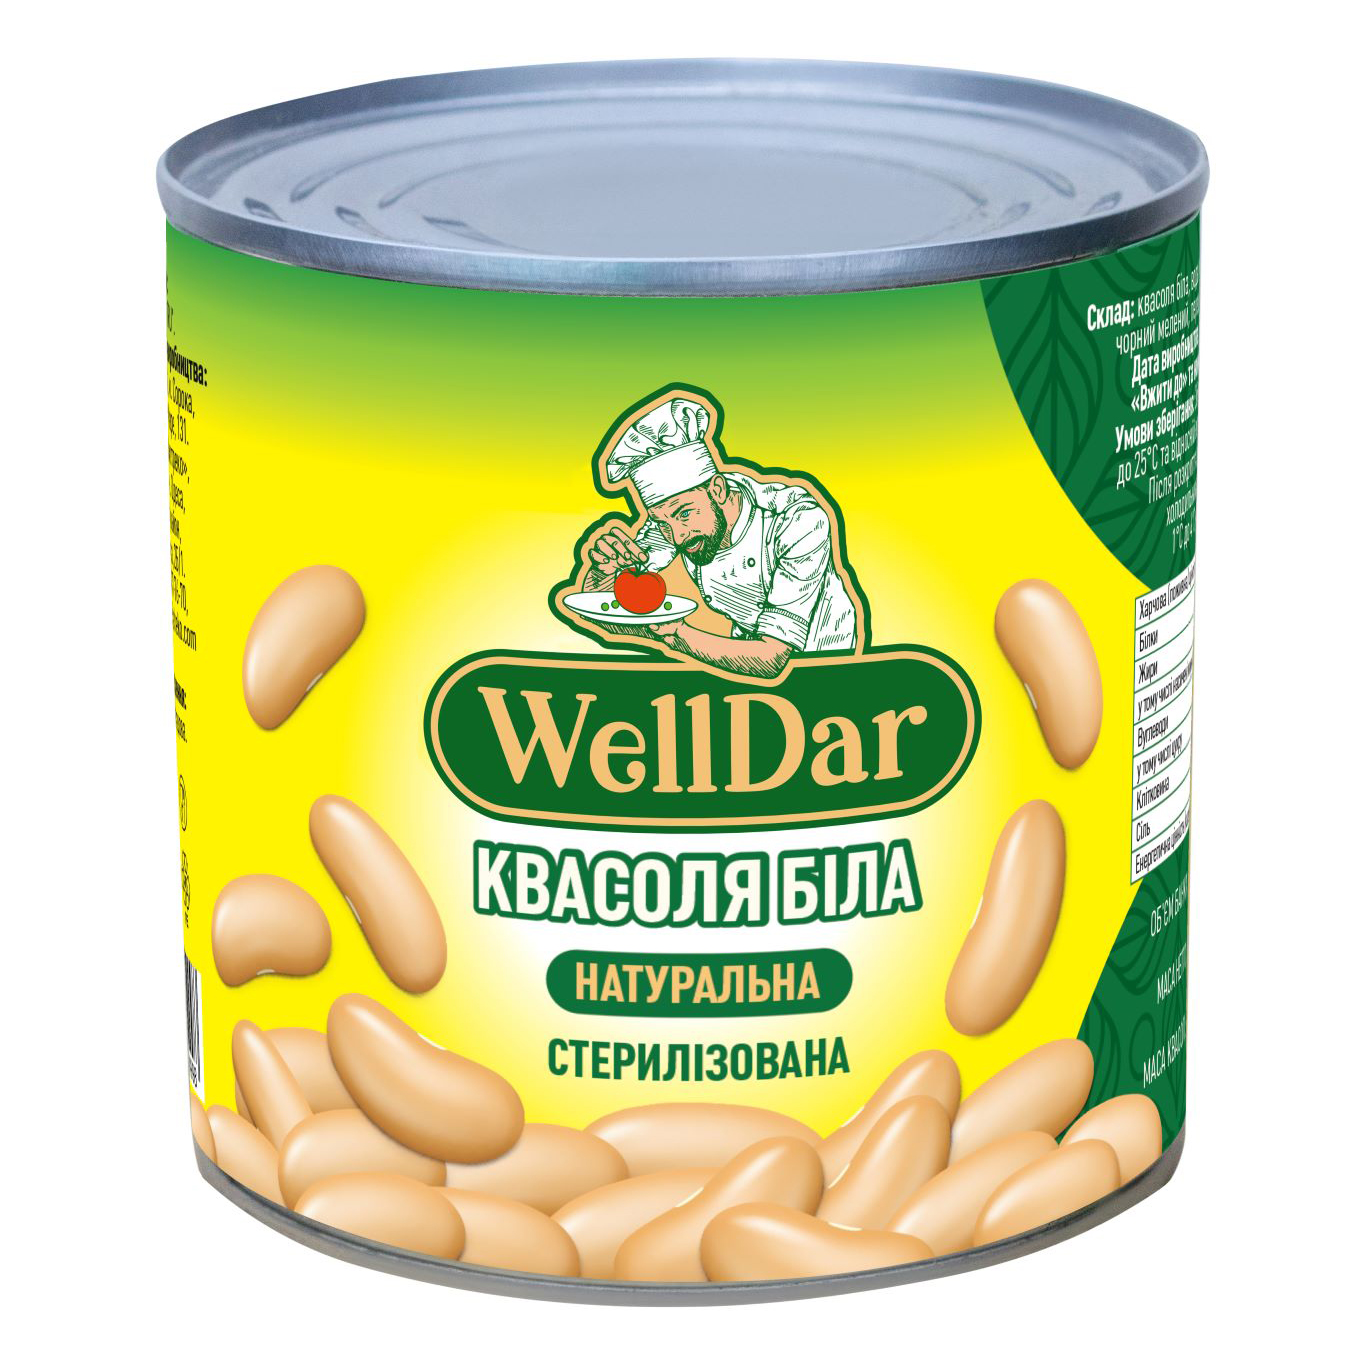 WellDar white natural sterilized beans 410g